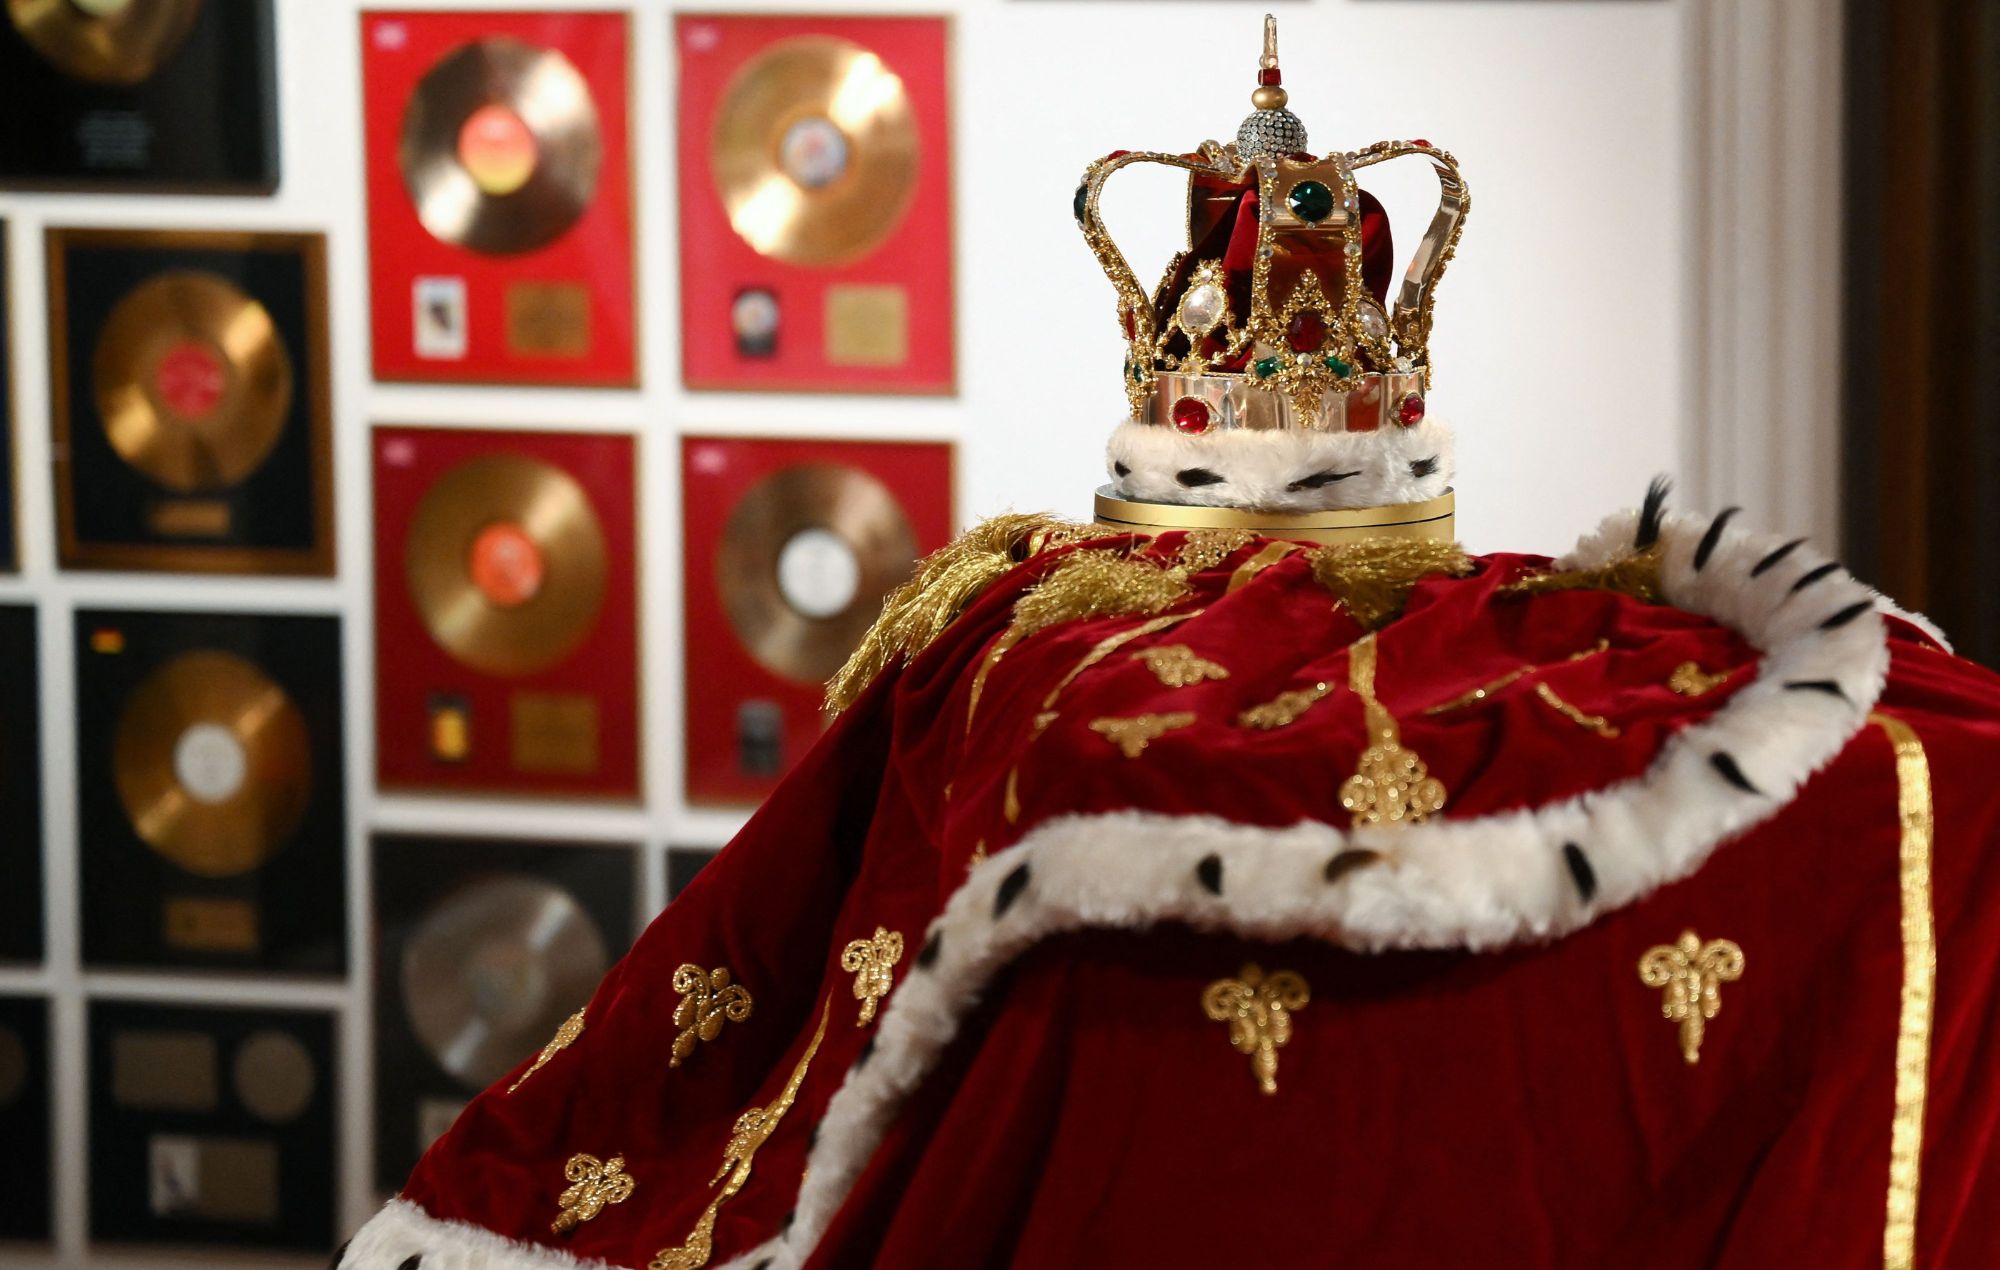 reddie Mercury's signature crown and cloak ensemble, worn throughout Queen's 1986 'Magic' Tour